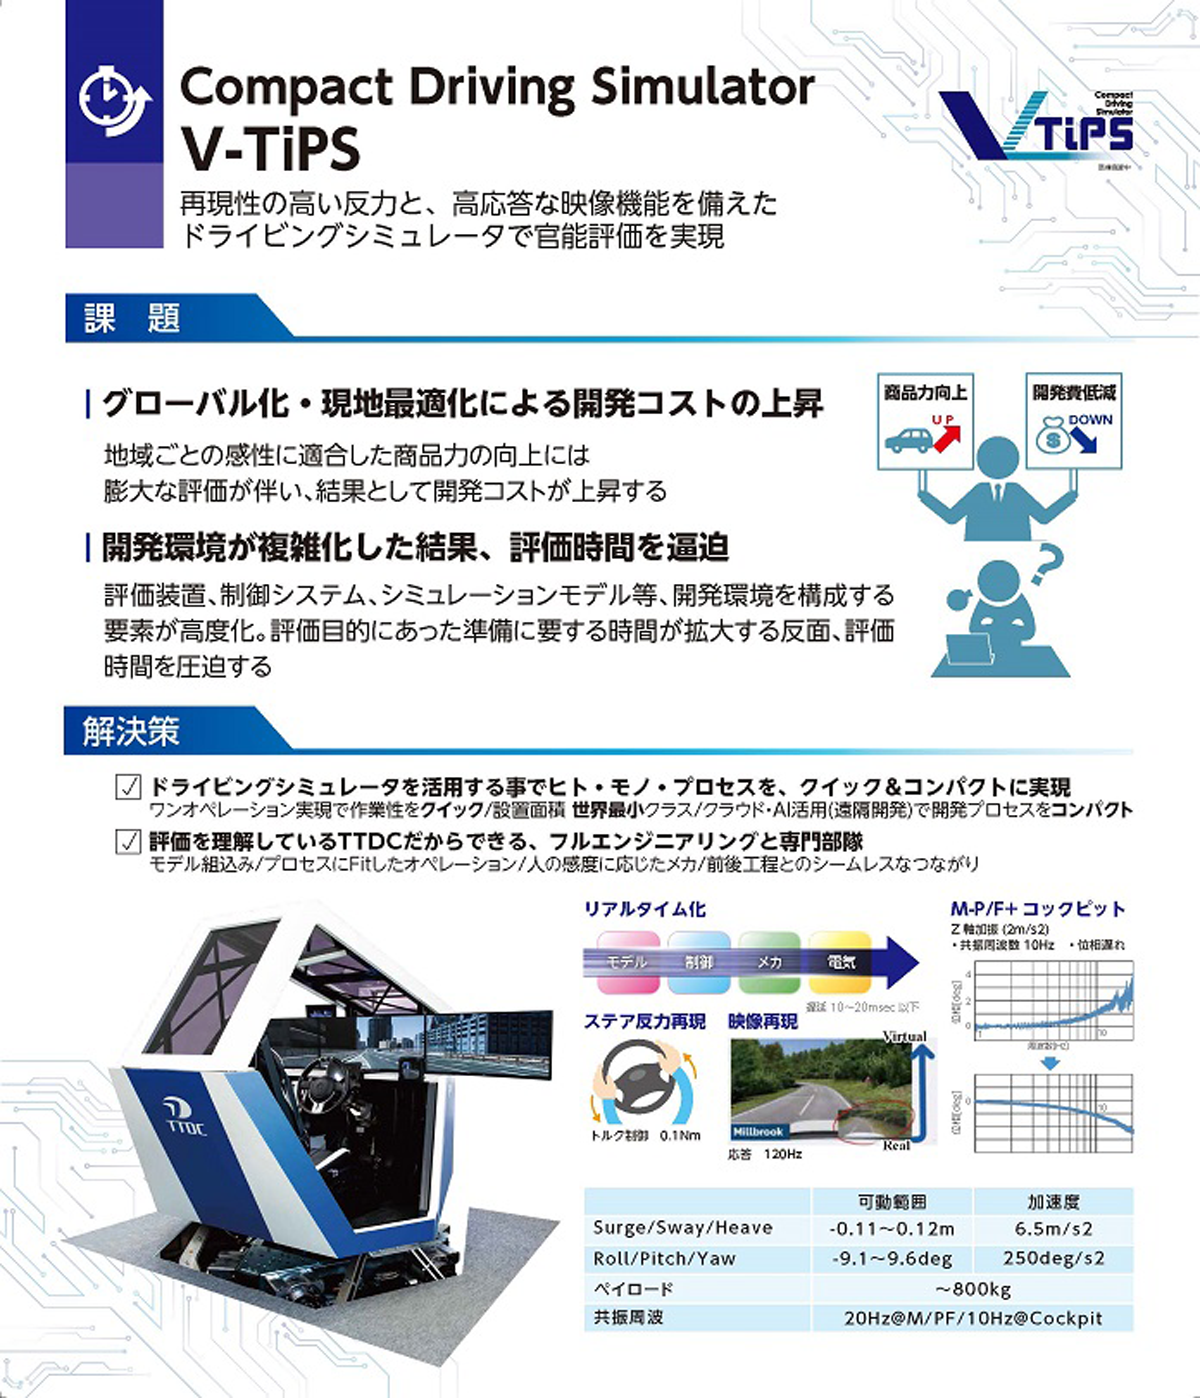 Compact Driving Simulator V-TiPS